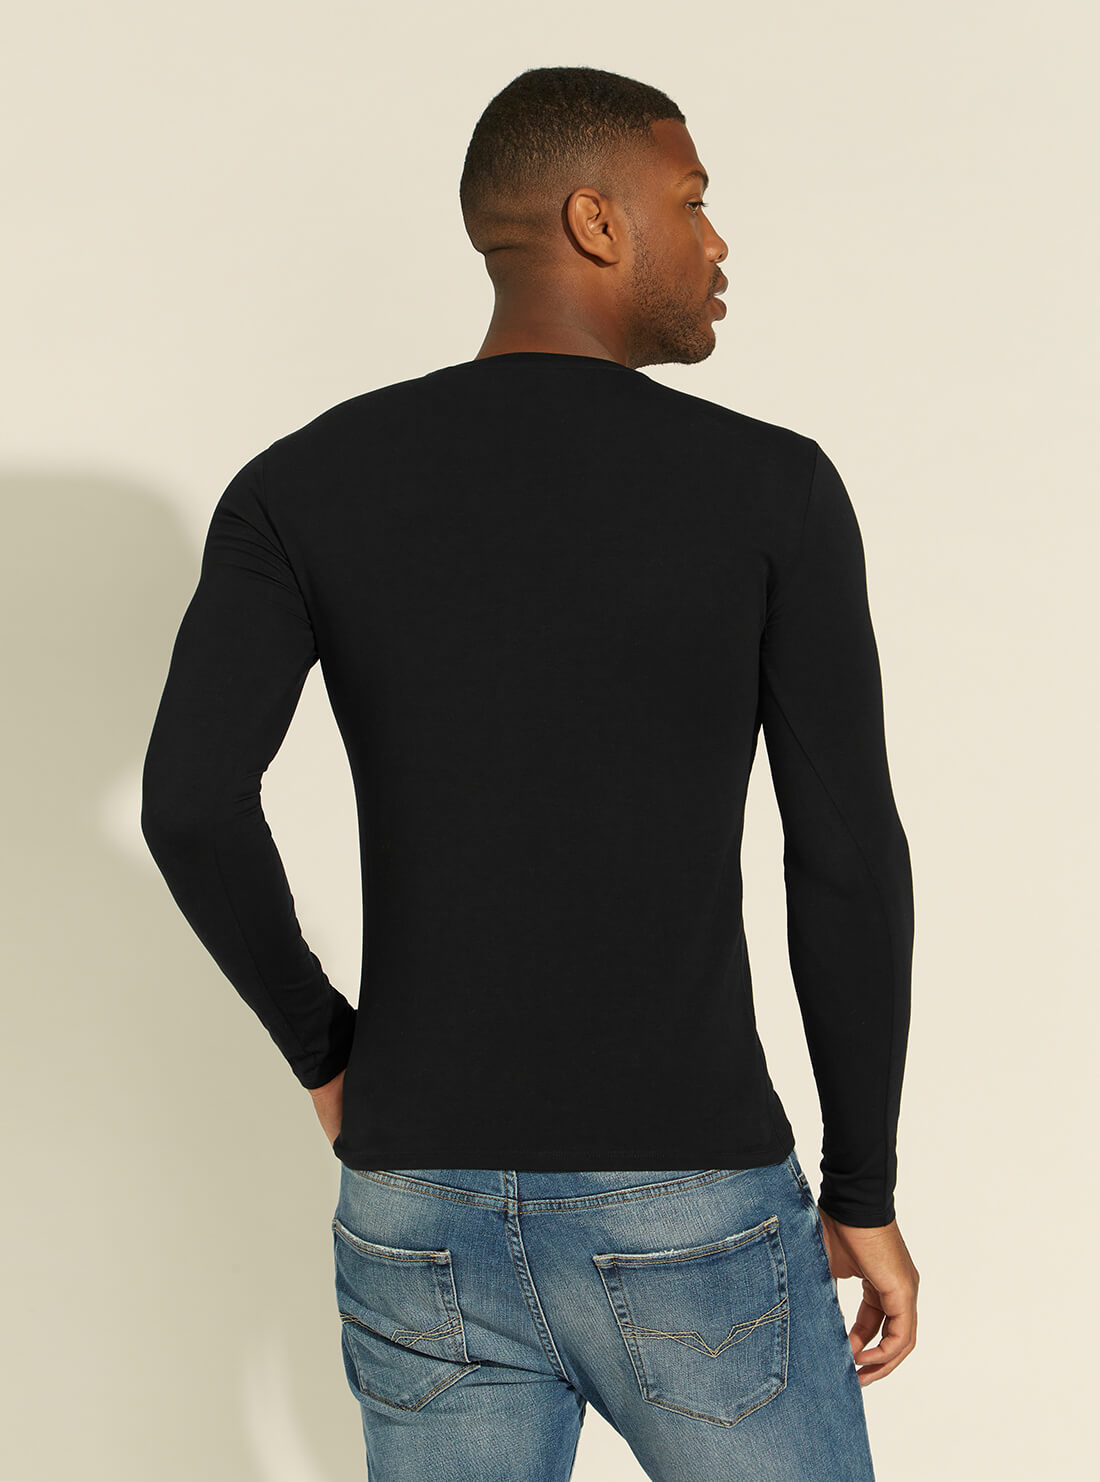 GUESS Mens Black Super Slim Long Sleeve T-Shirt M1RI28J1311 Back View